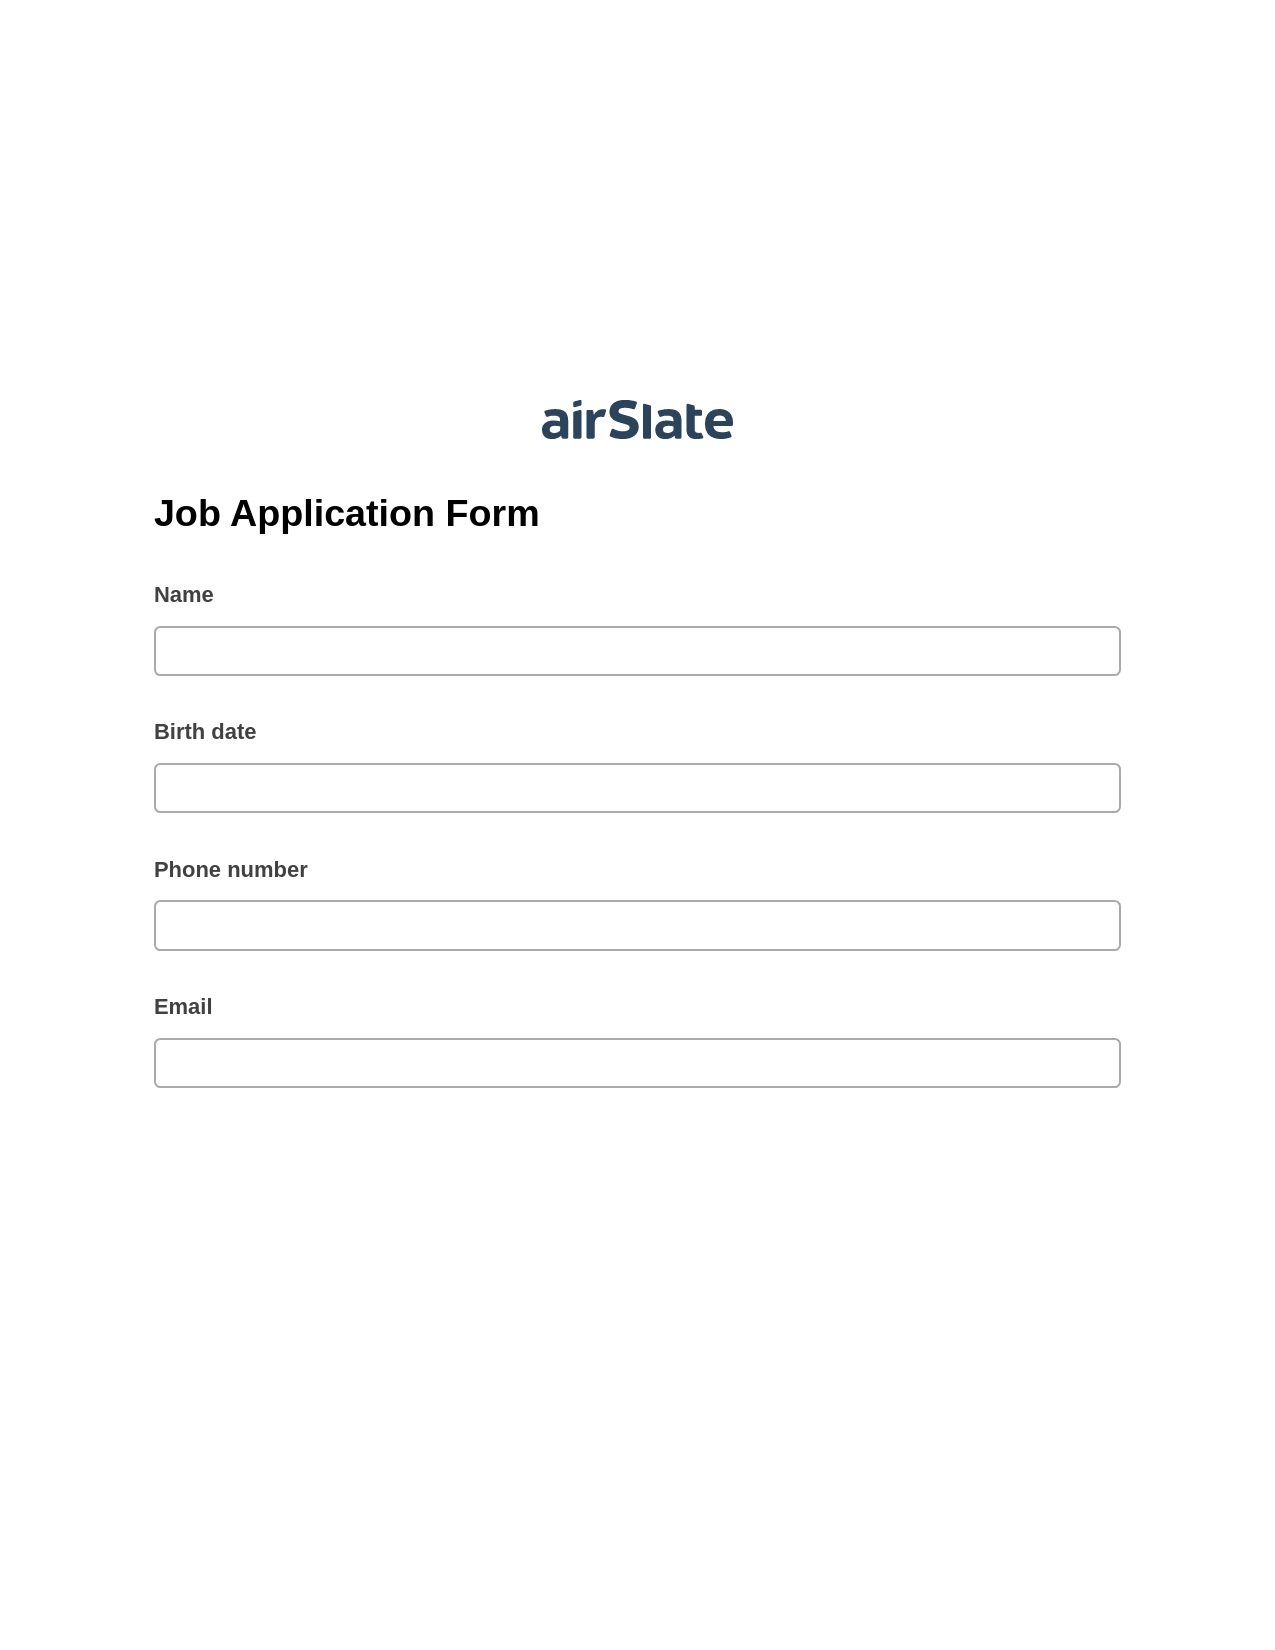 Job Application Form Pre-fill Dropdowns from Office 365 Excel Bot, Revoke Access Bot, Google Drive Bot